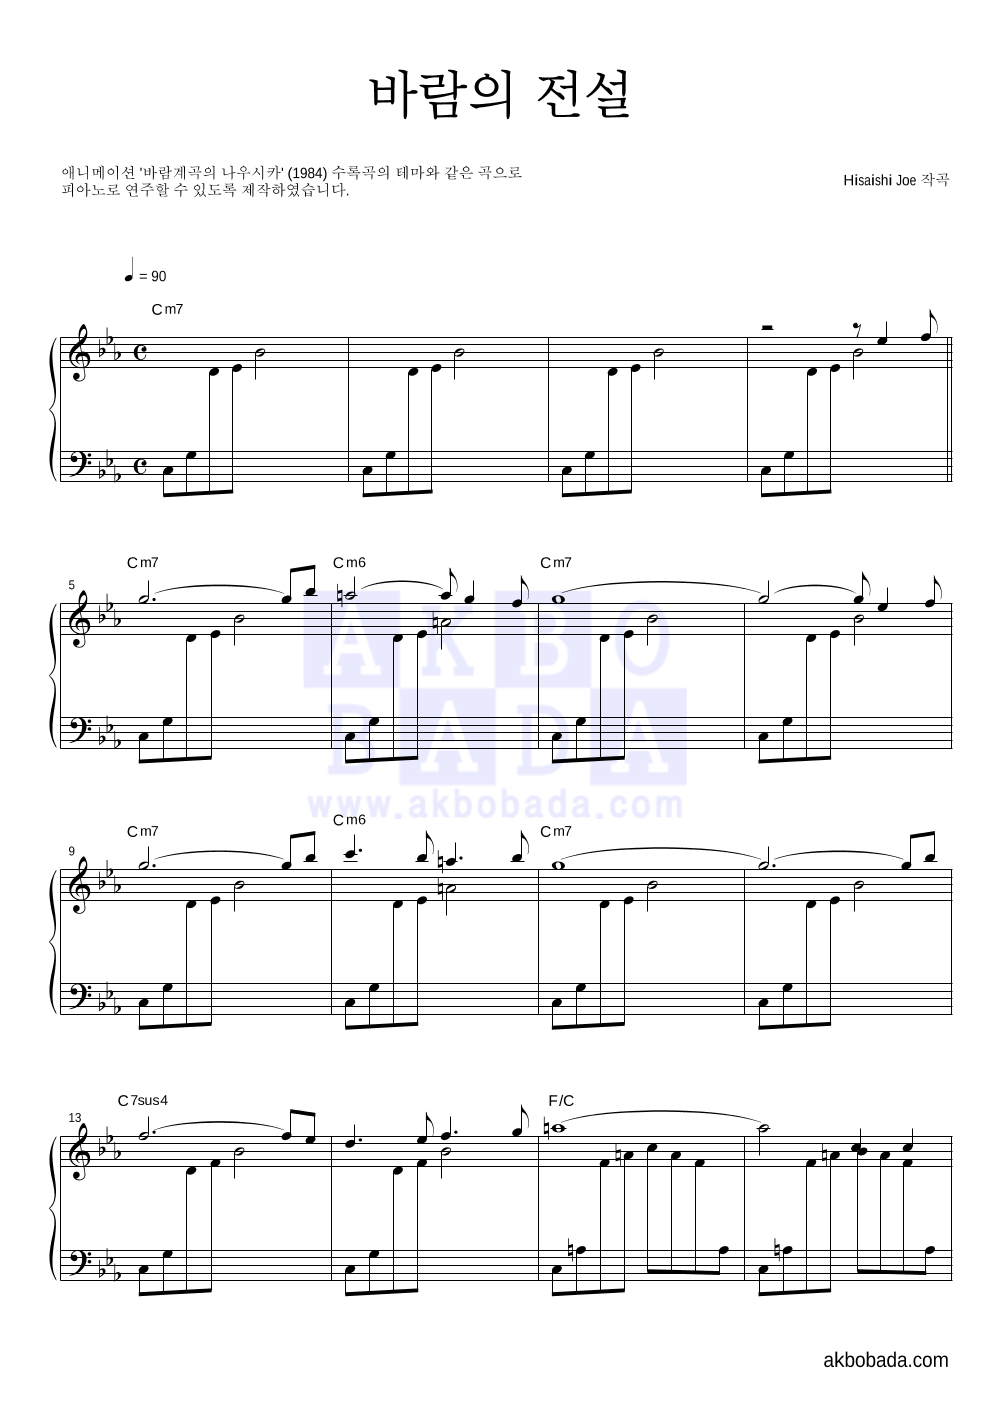 Hisaishi Joe - 바람의 전설 (바람 계곡의 나우시카) 피아노 2단 악보 